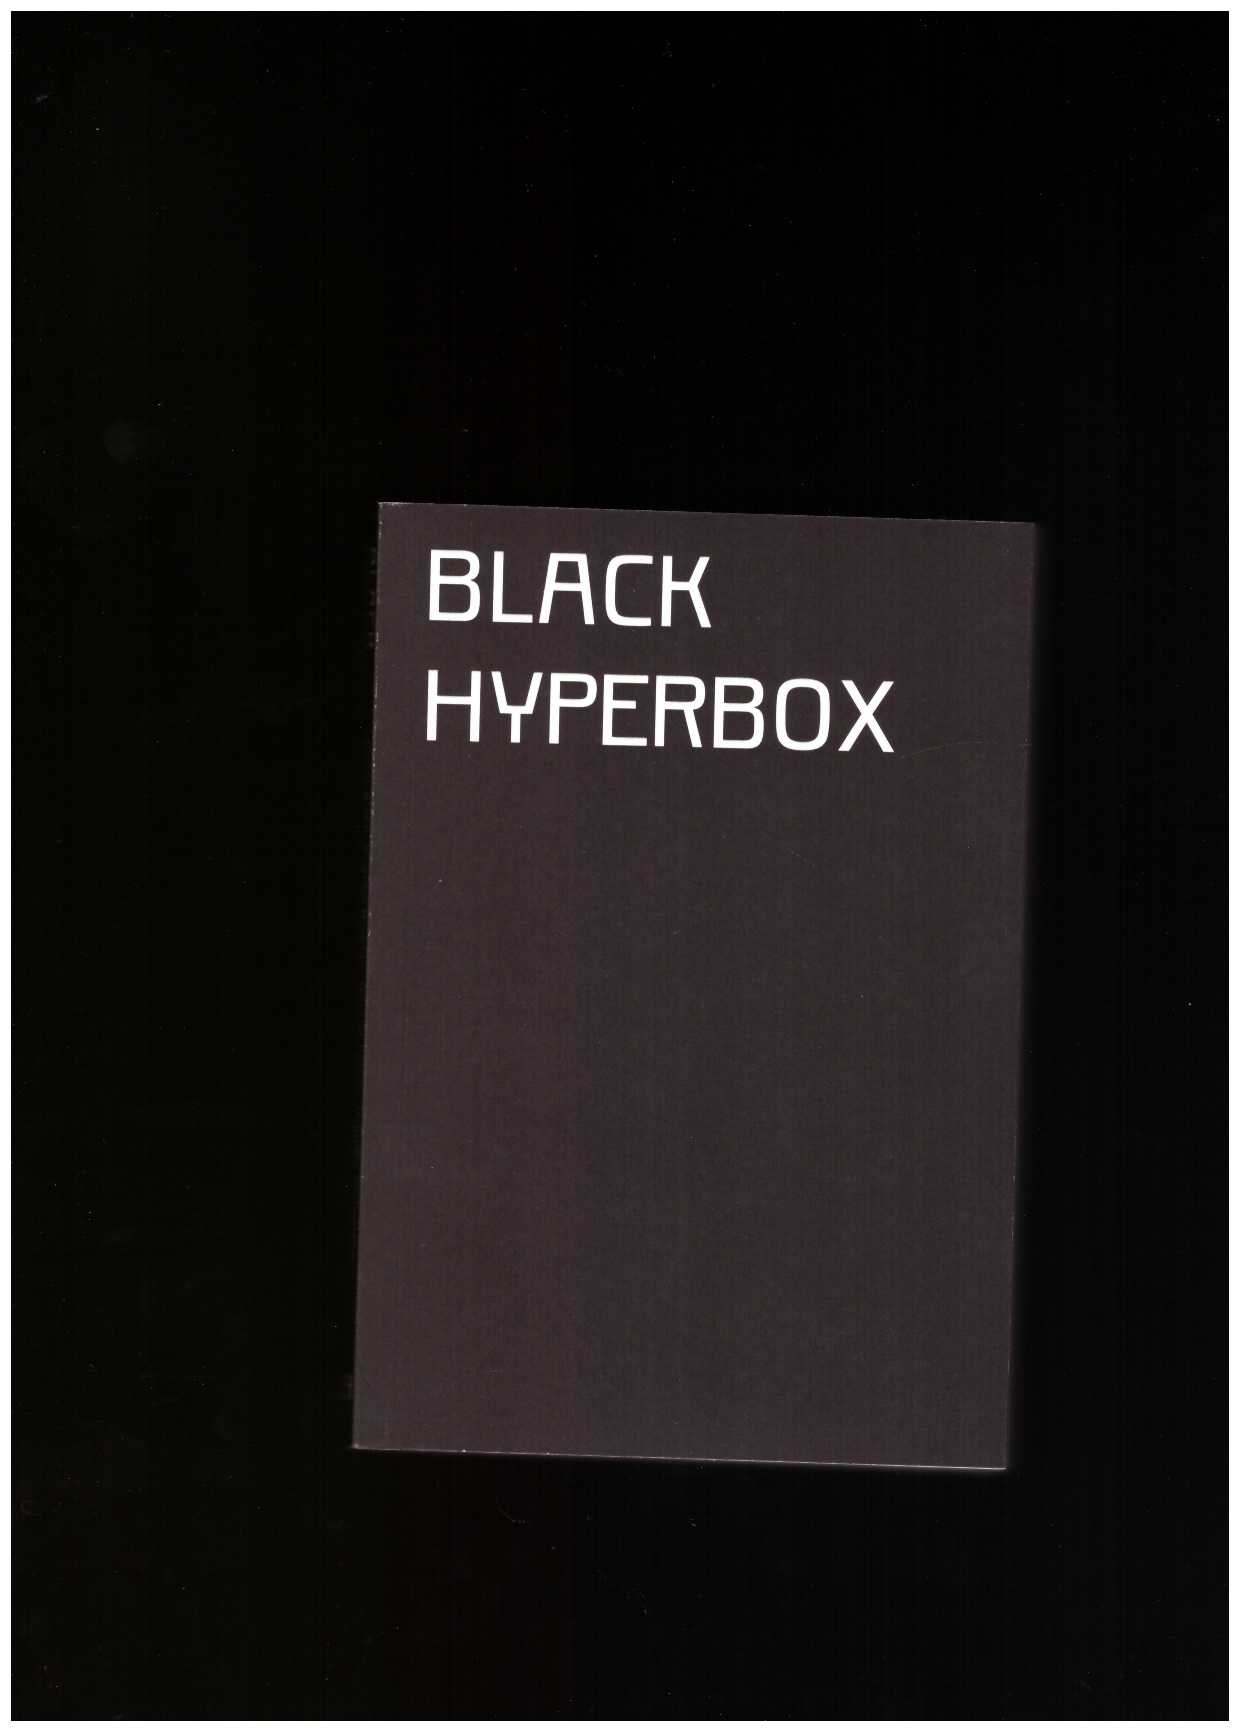 POPA, Alina; FLUERAŞ, Florin (eds.) - Black Hyperbox